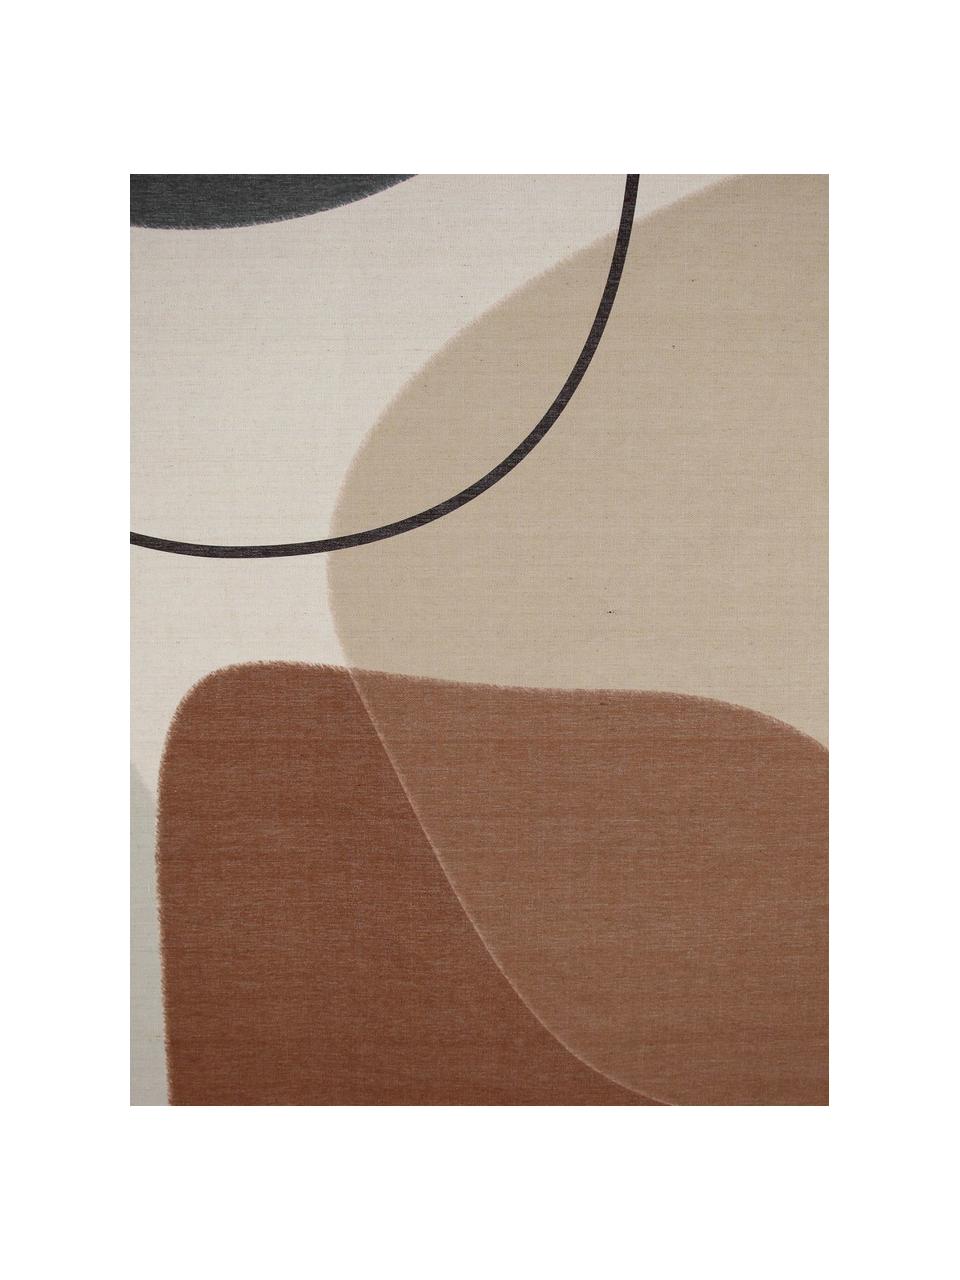 Wandobject Abby, Canvas, kunststof, Wit, bruin, beige, zwart, 105 x 136 cm